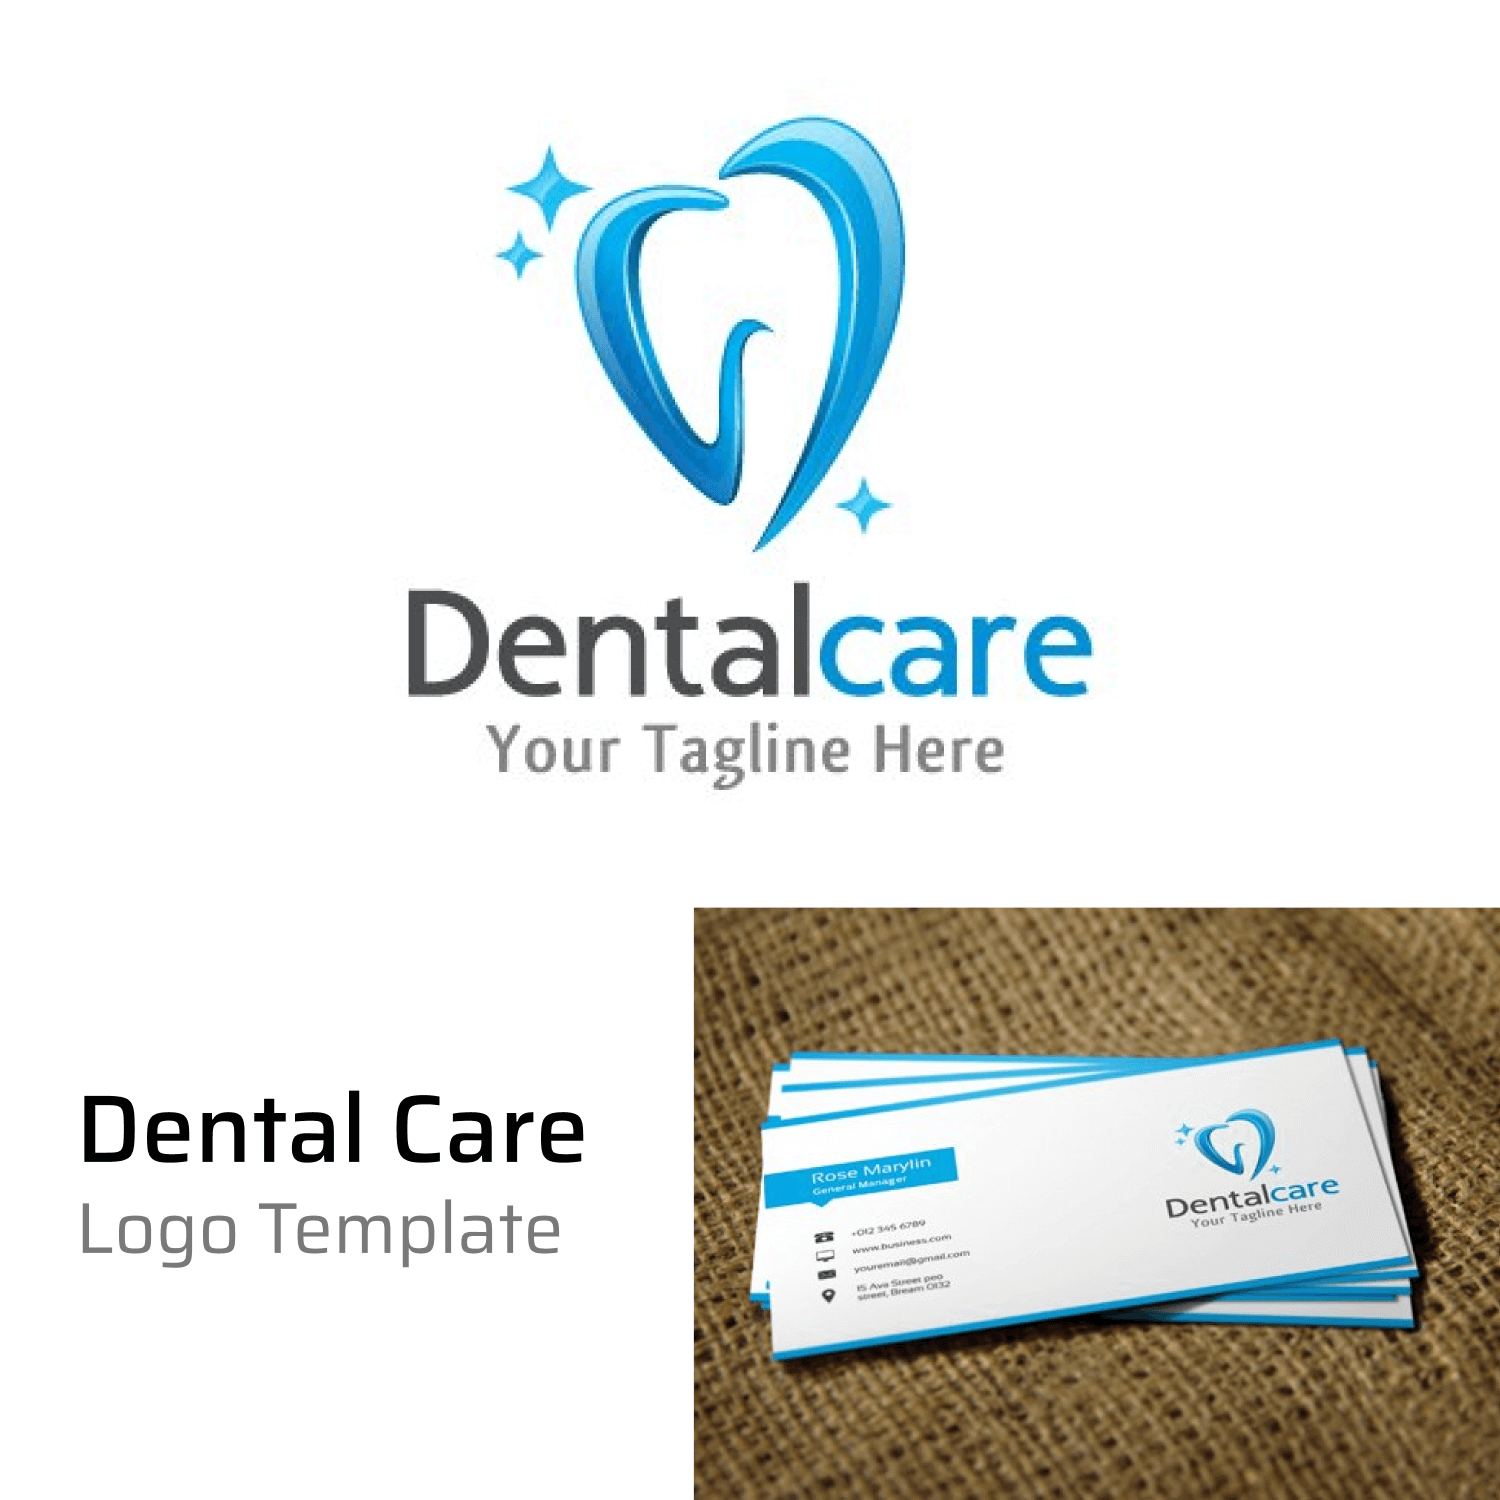 Cards of Dentalcare.